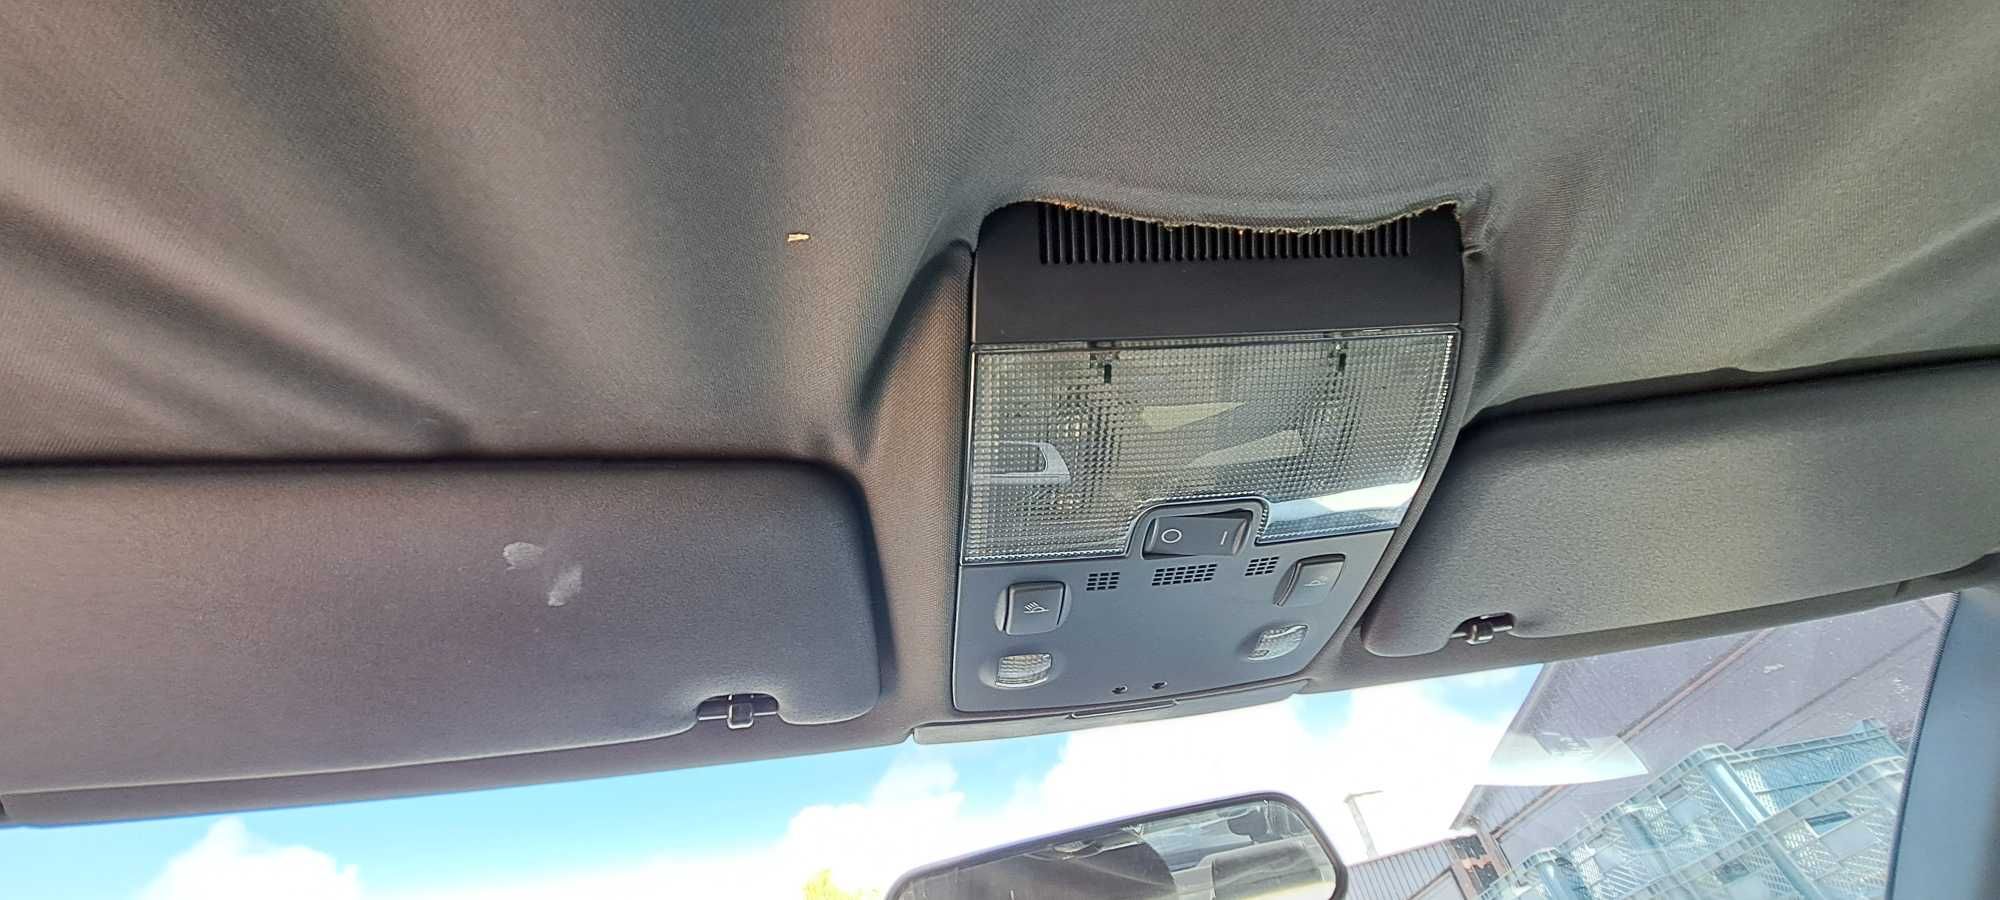 Panel Oświetlenia Kabiny Audi A4 B6